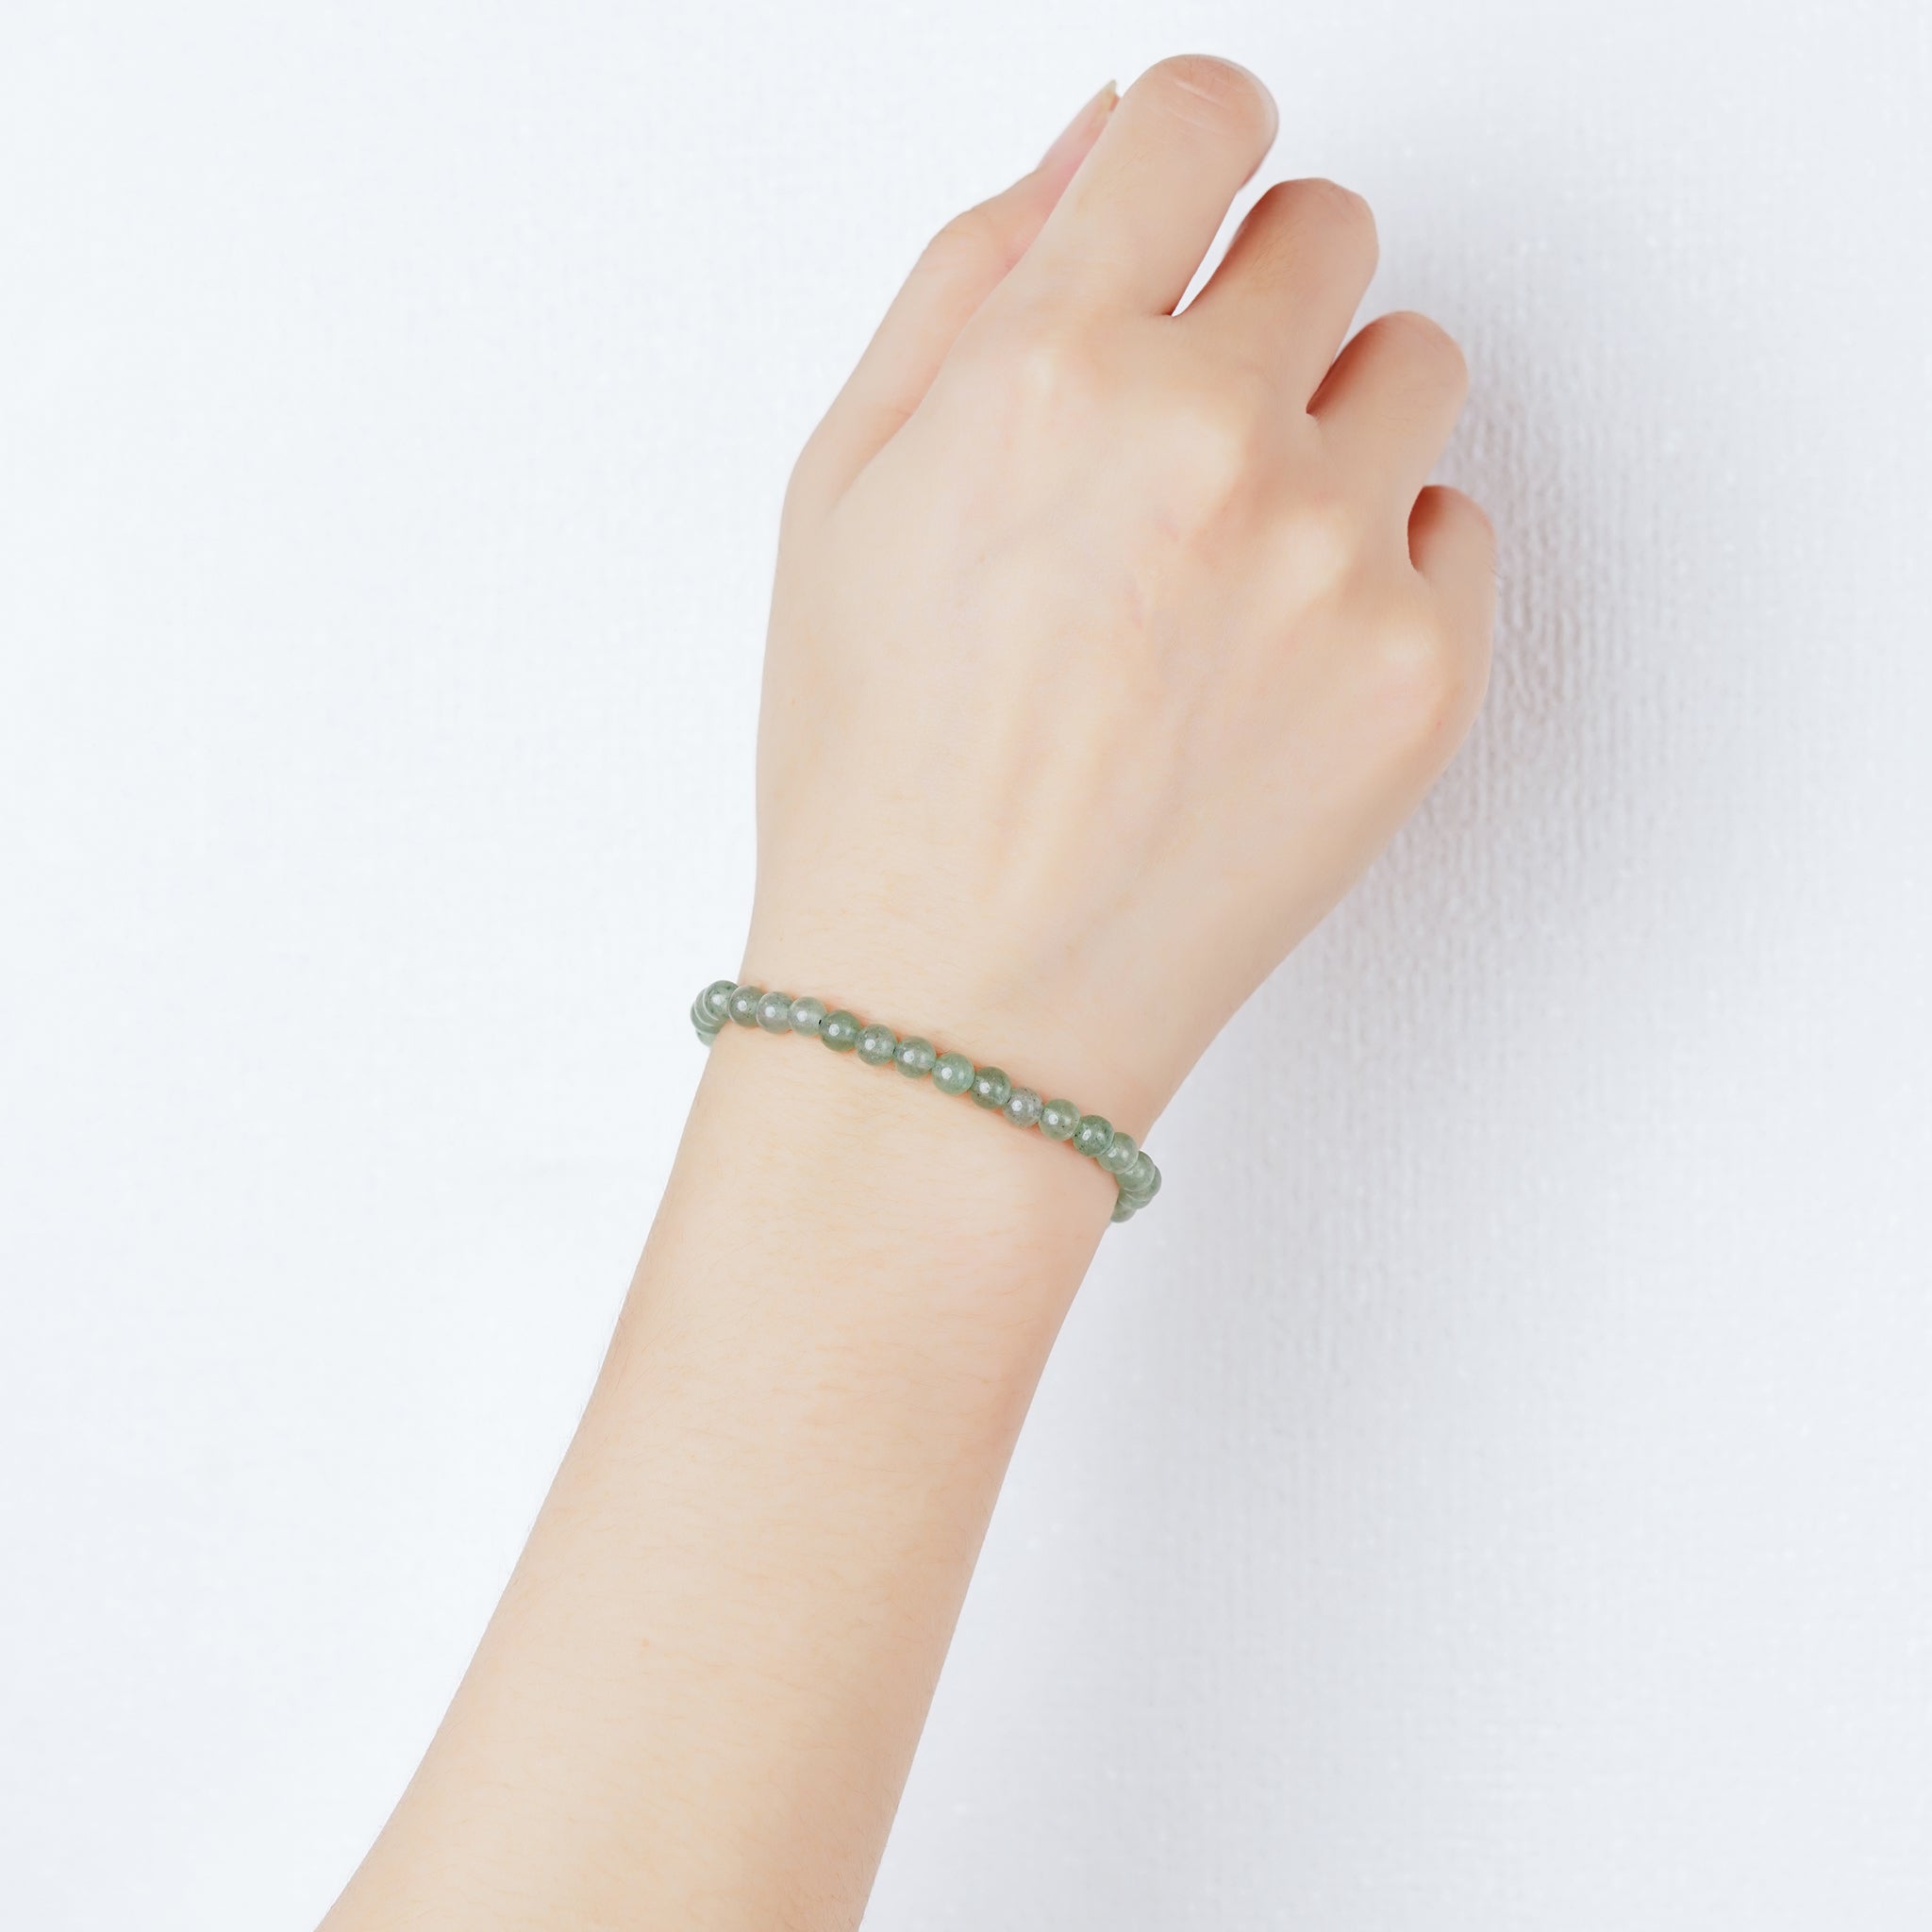 Adjustable 4mm bracelet - Green Aventurine